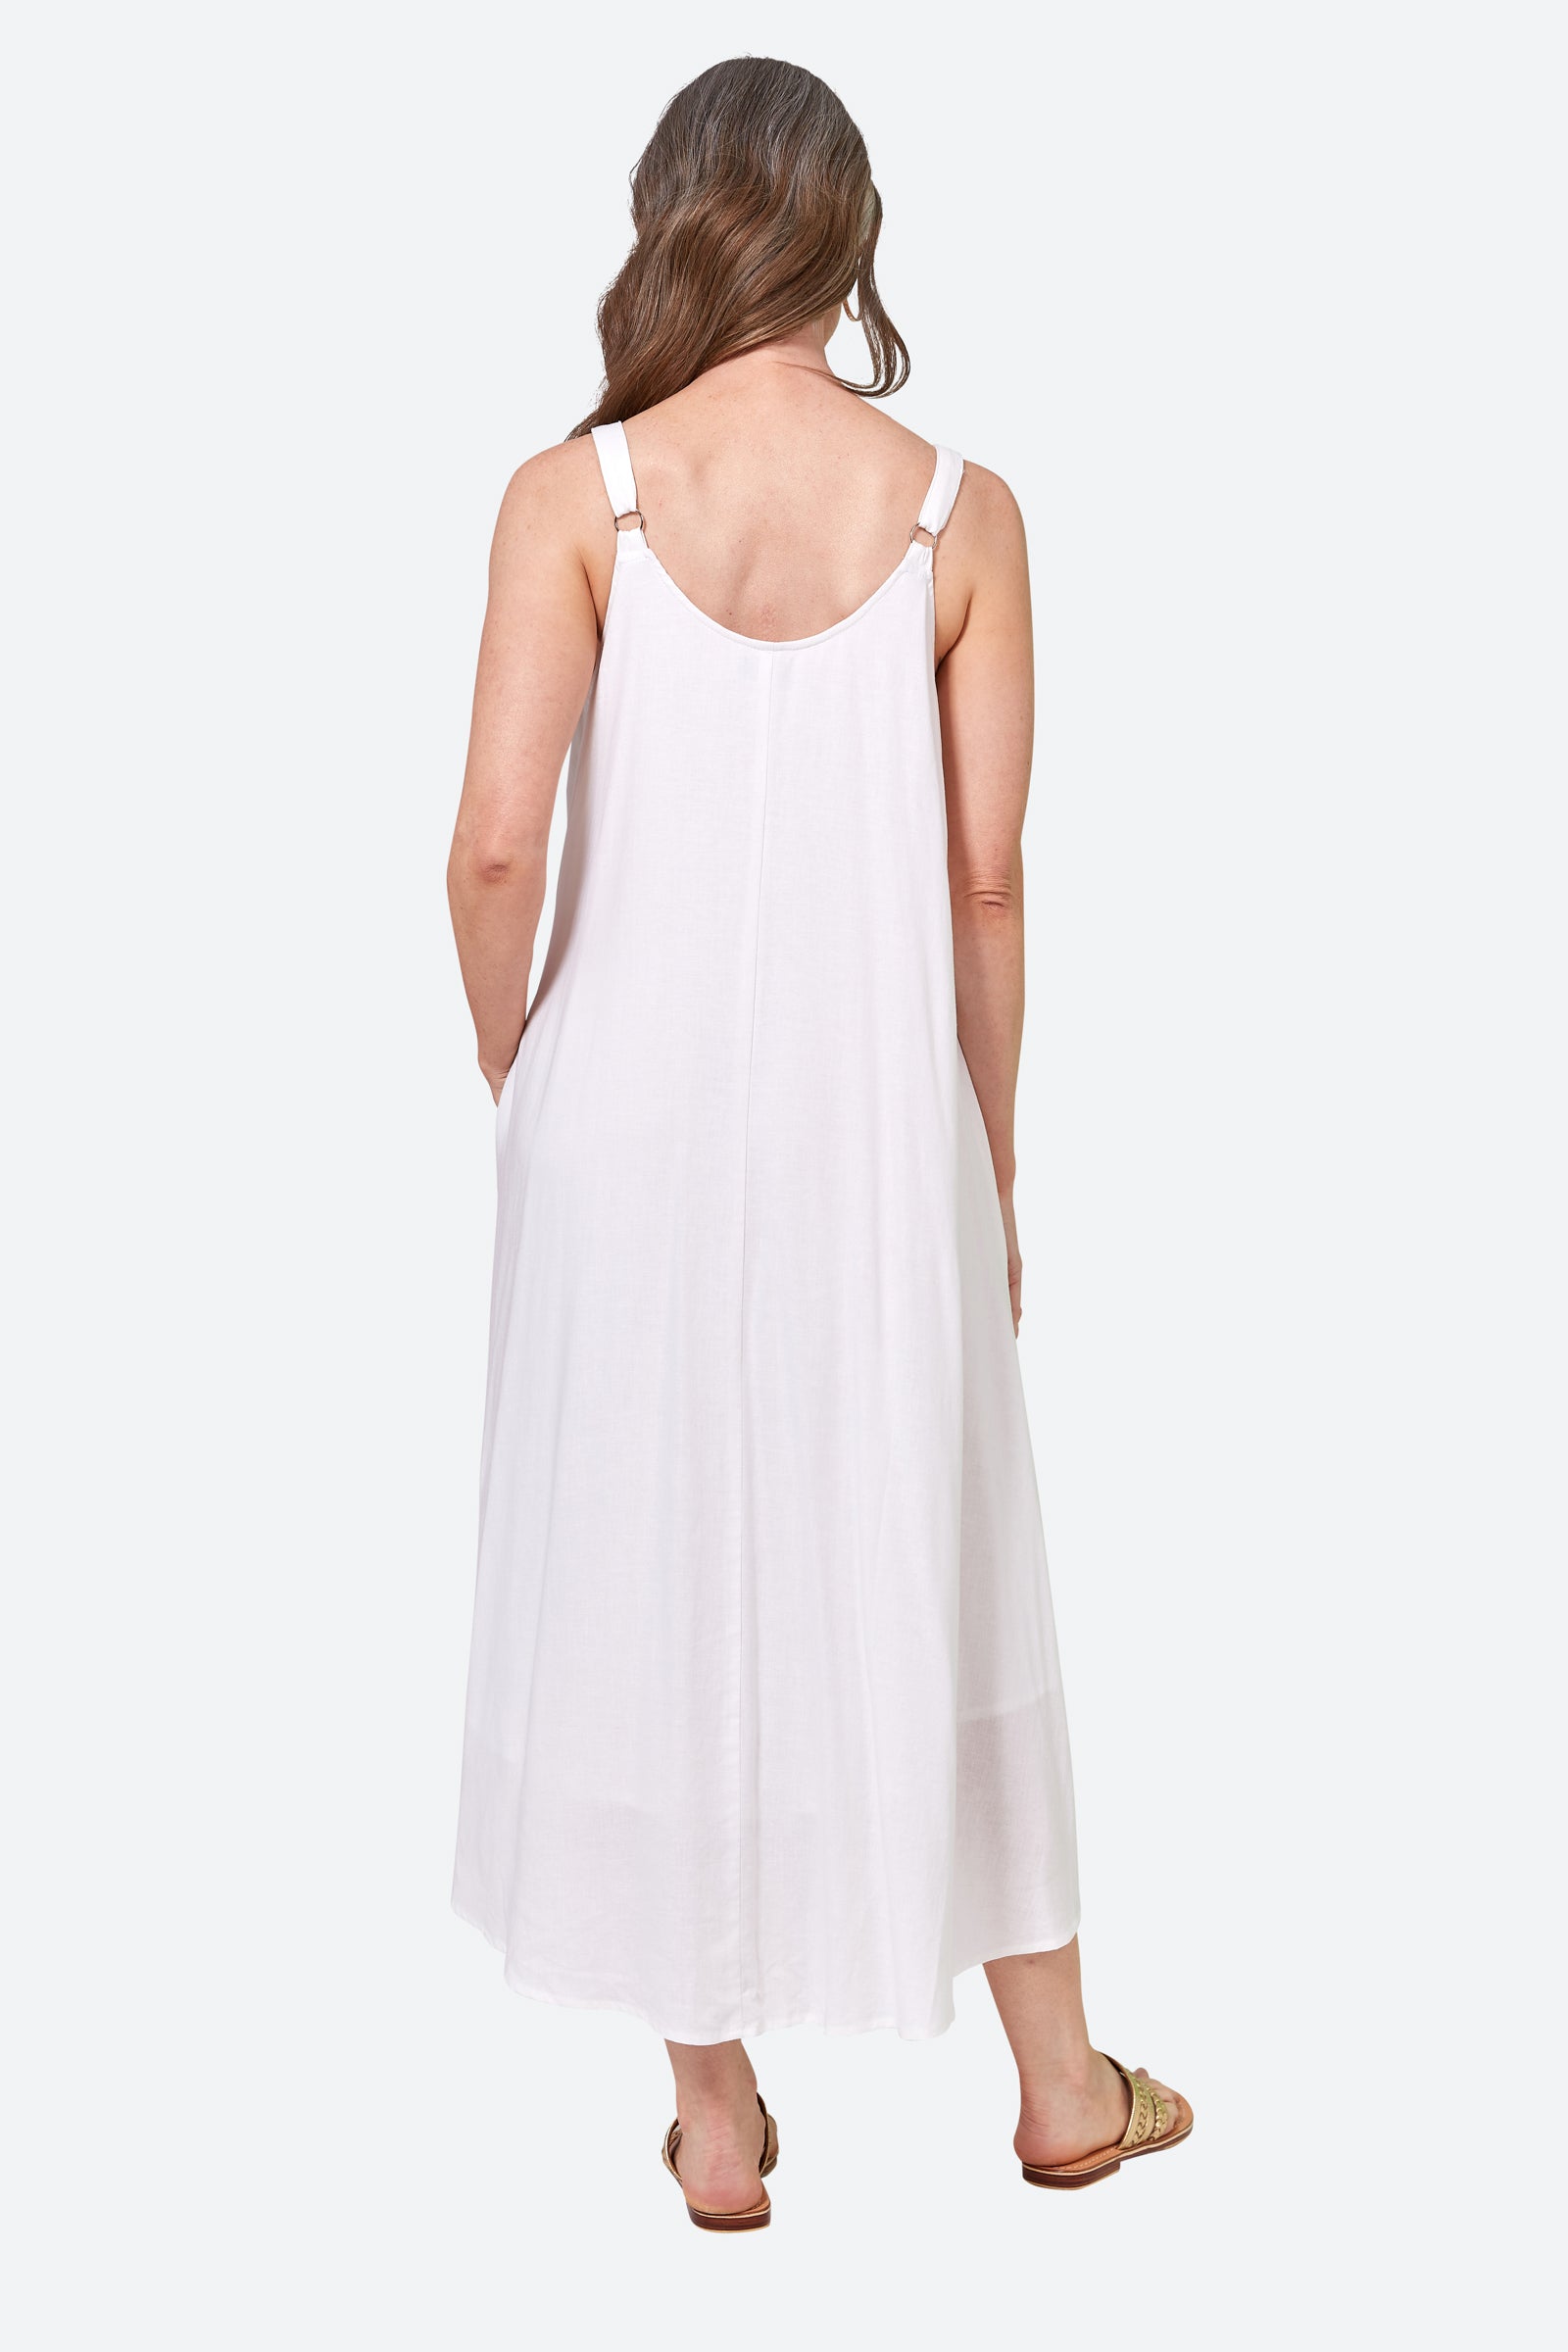 Verve Tank Maxi - Blanc - eb&ive Clothing - Dress Strappy Maxi Linen